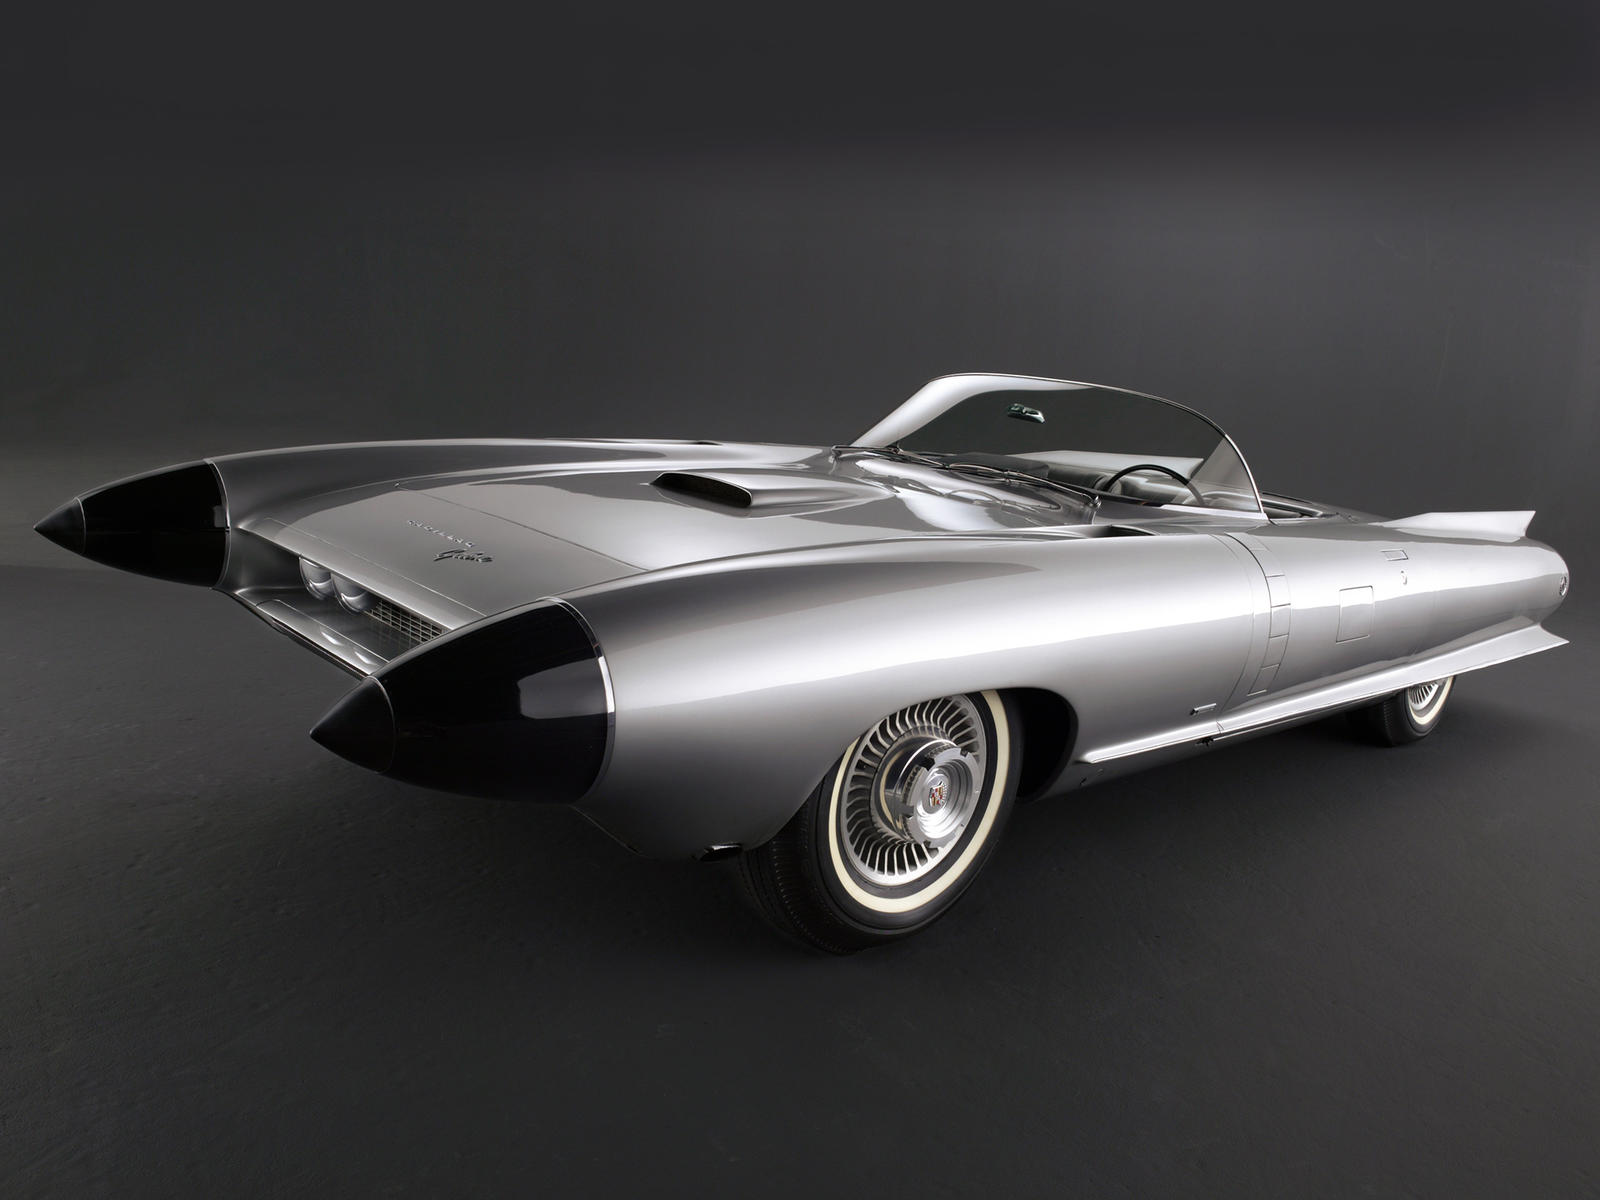 1959 Cadillac Cyclone Motorama Dream Car